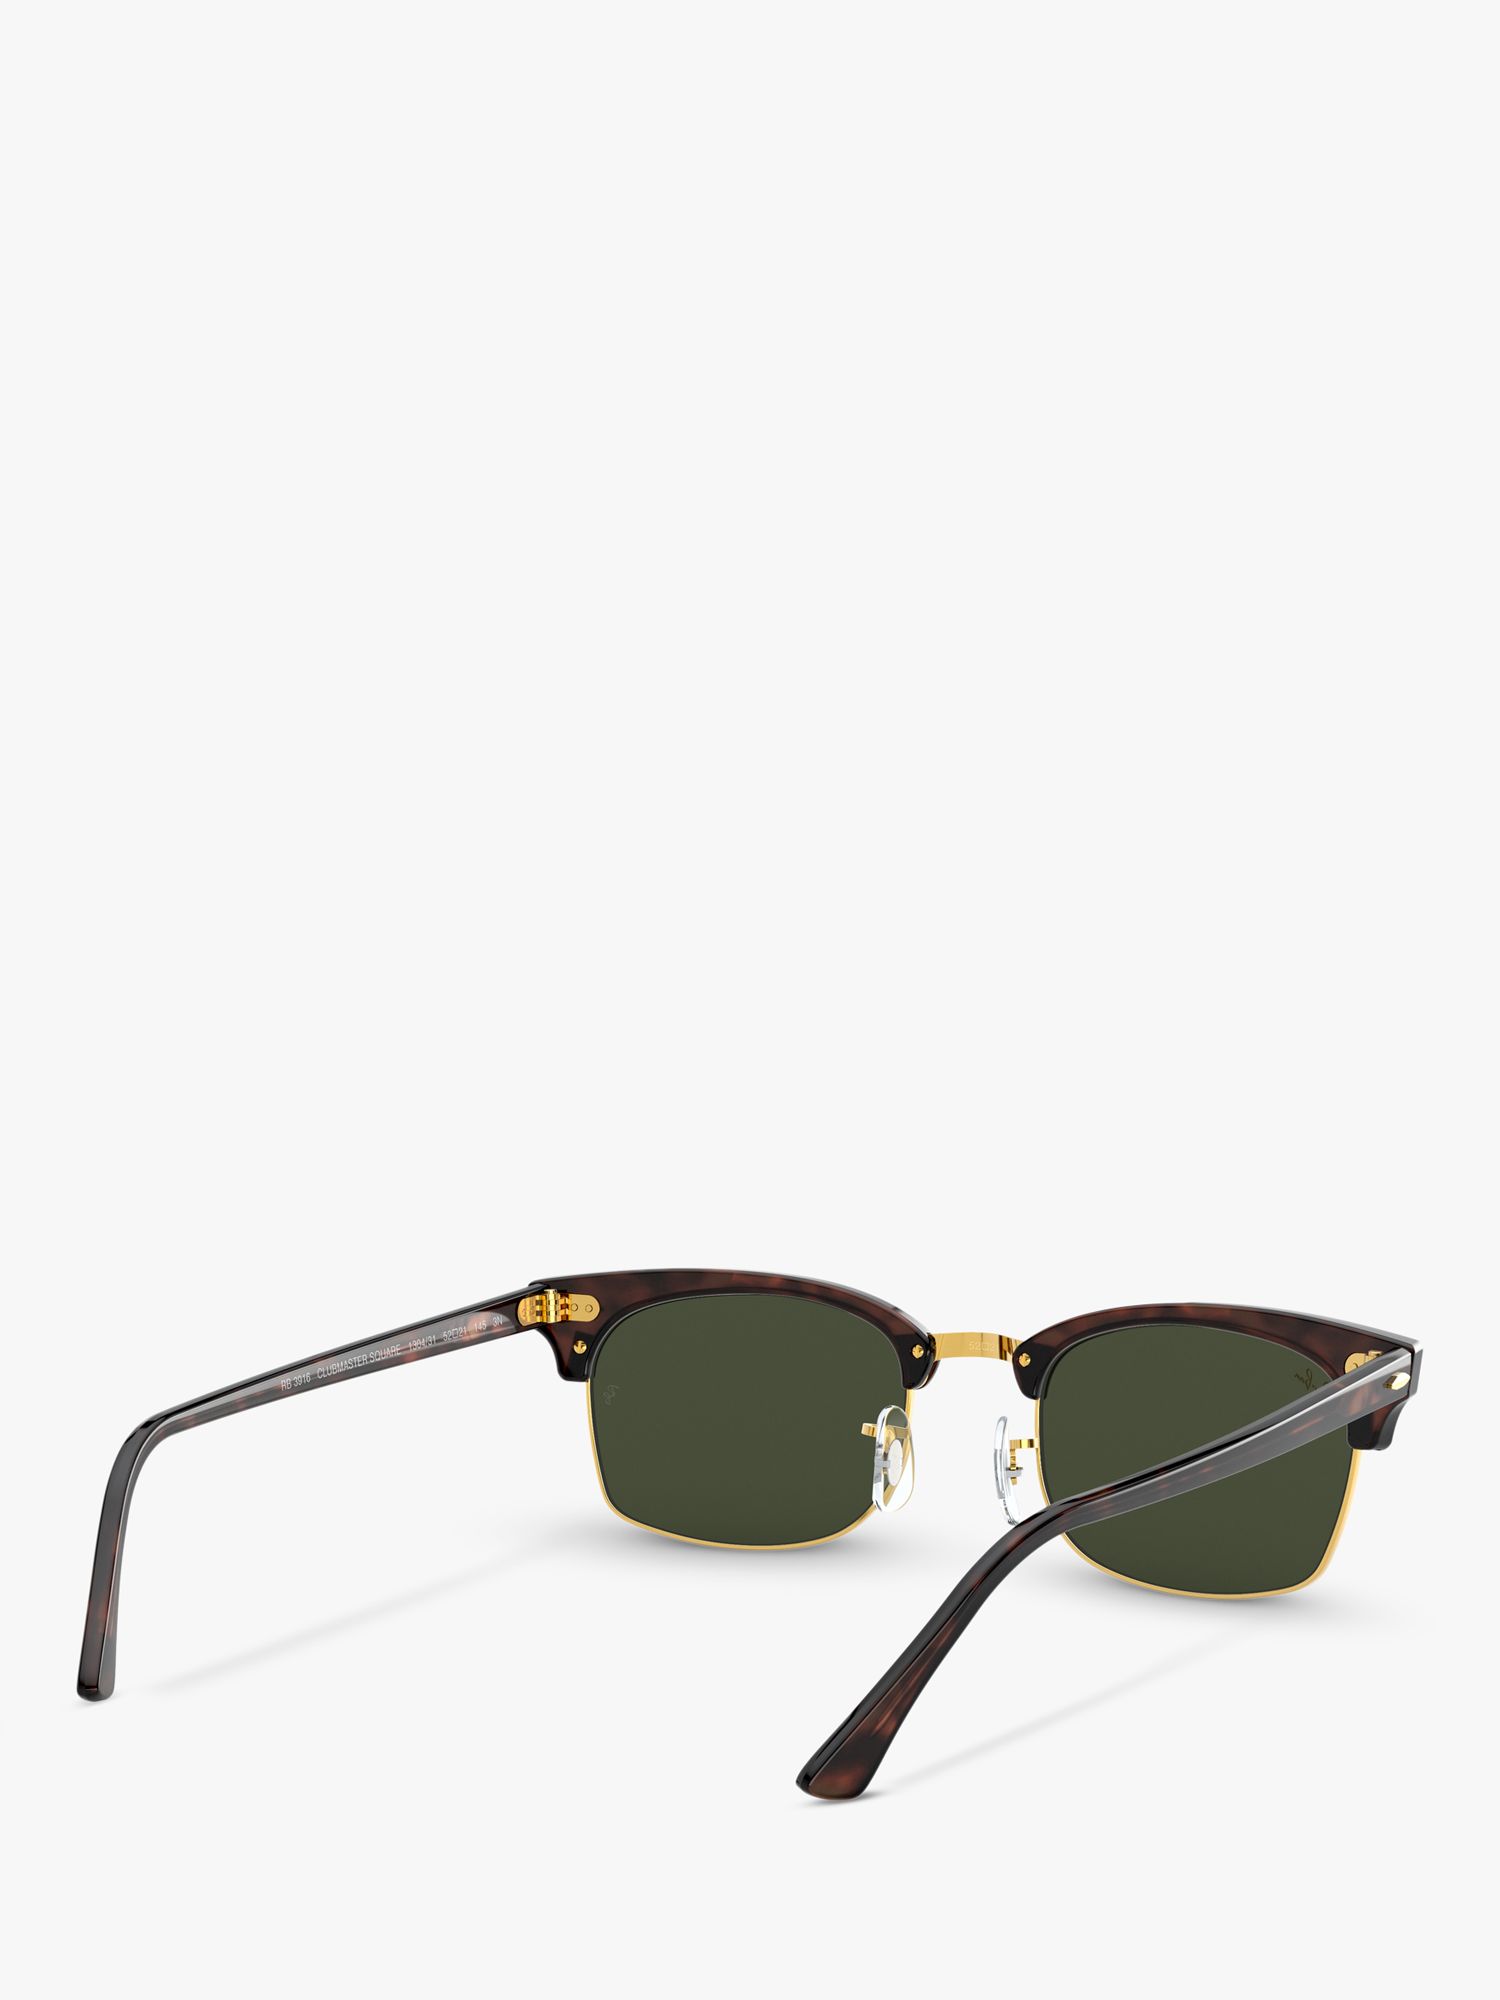 Ray-Ban RB3916 Unisex Rectangular Sunglasses, Mock Tortoise/Green